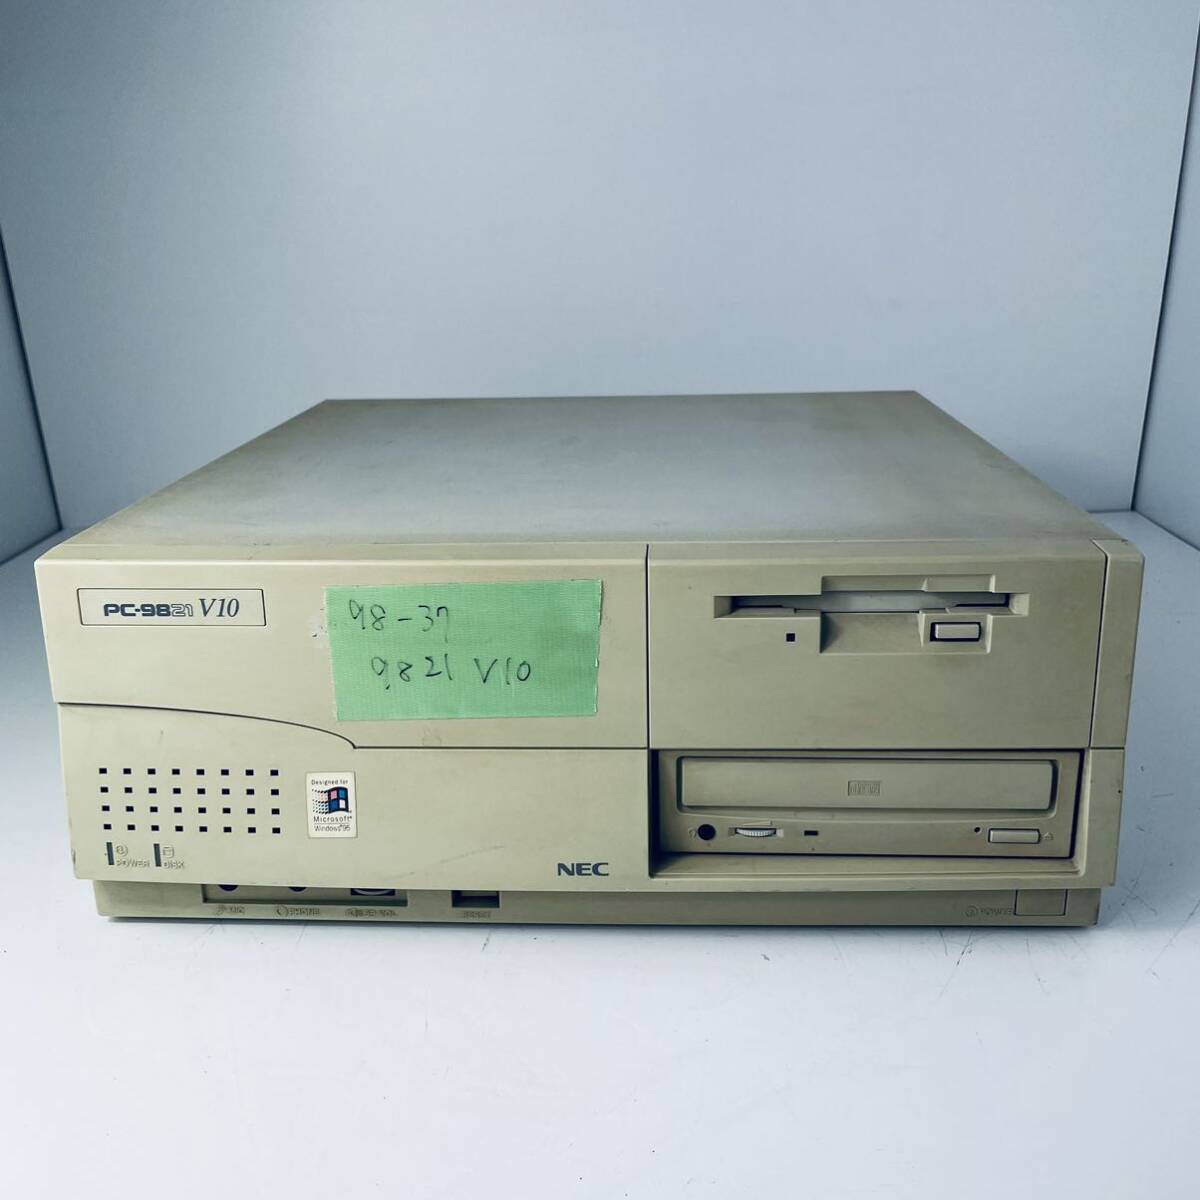 98-37 NEC PC-9821V10 HDD欠 Pentium 100Mhz RAM 640+? 電源入りますが画面出力されませんでしたの画像1